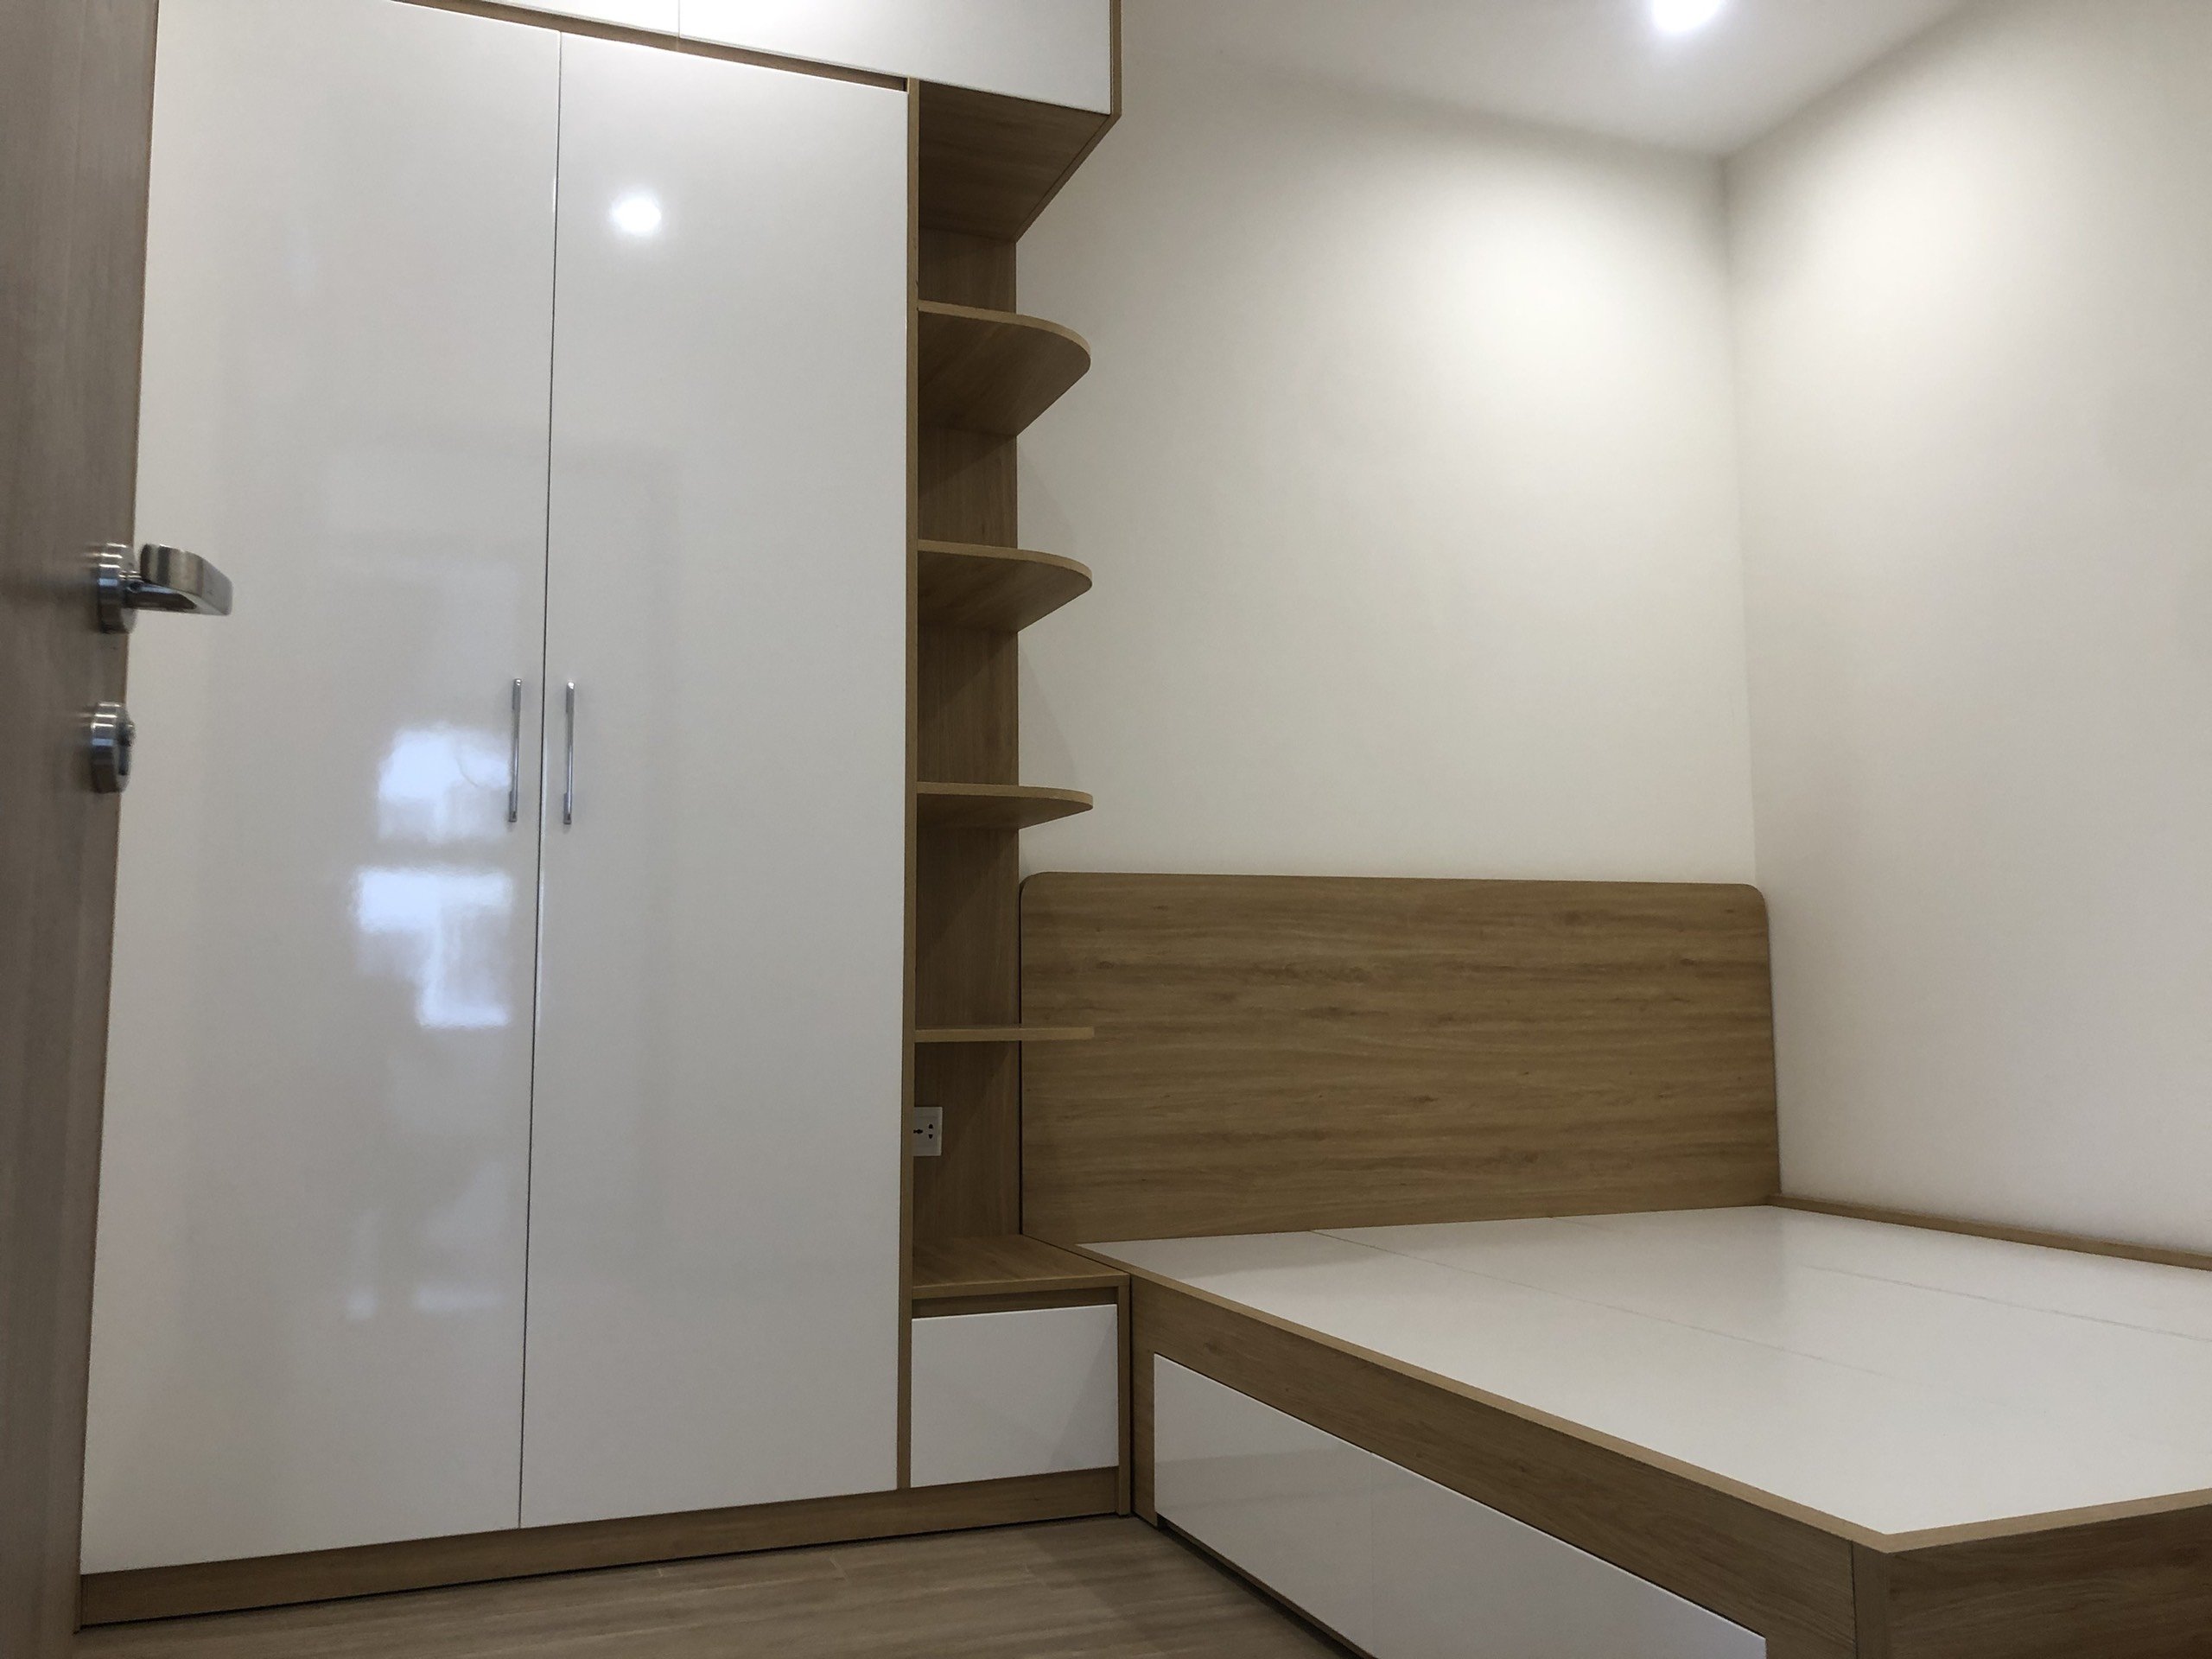 New rental 1 bedroom apartment in Vinhomes Ocean Park S212 for rent 6